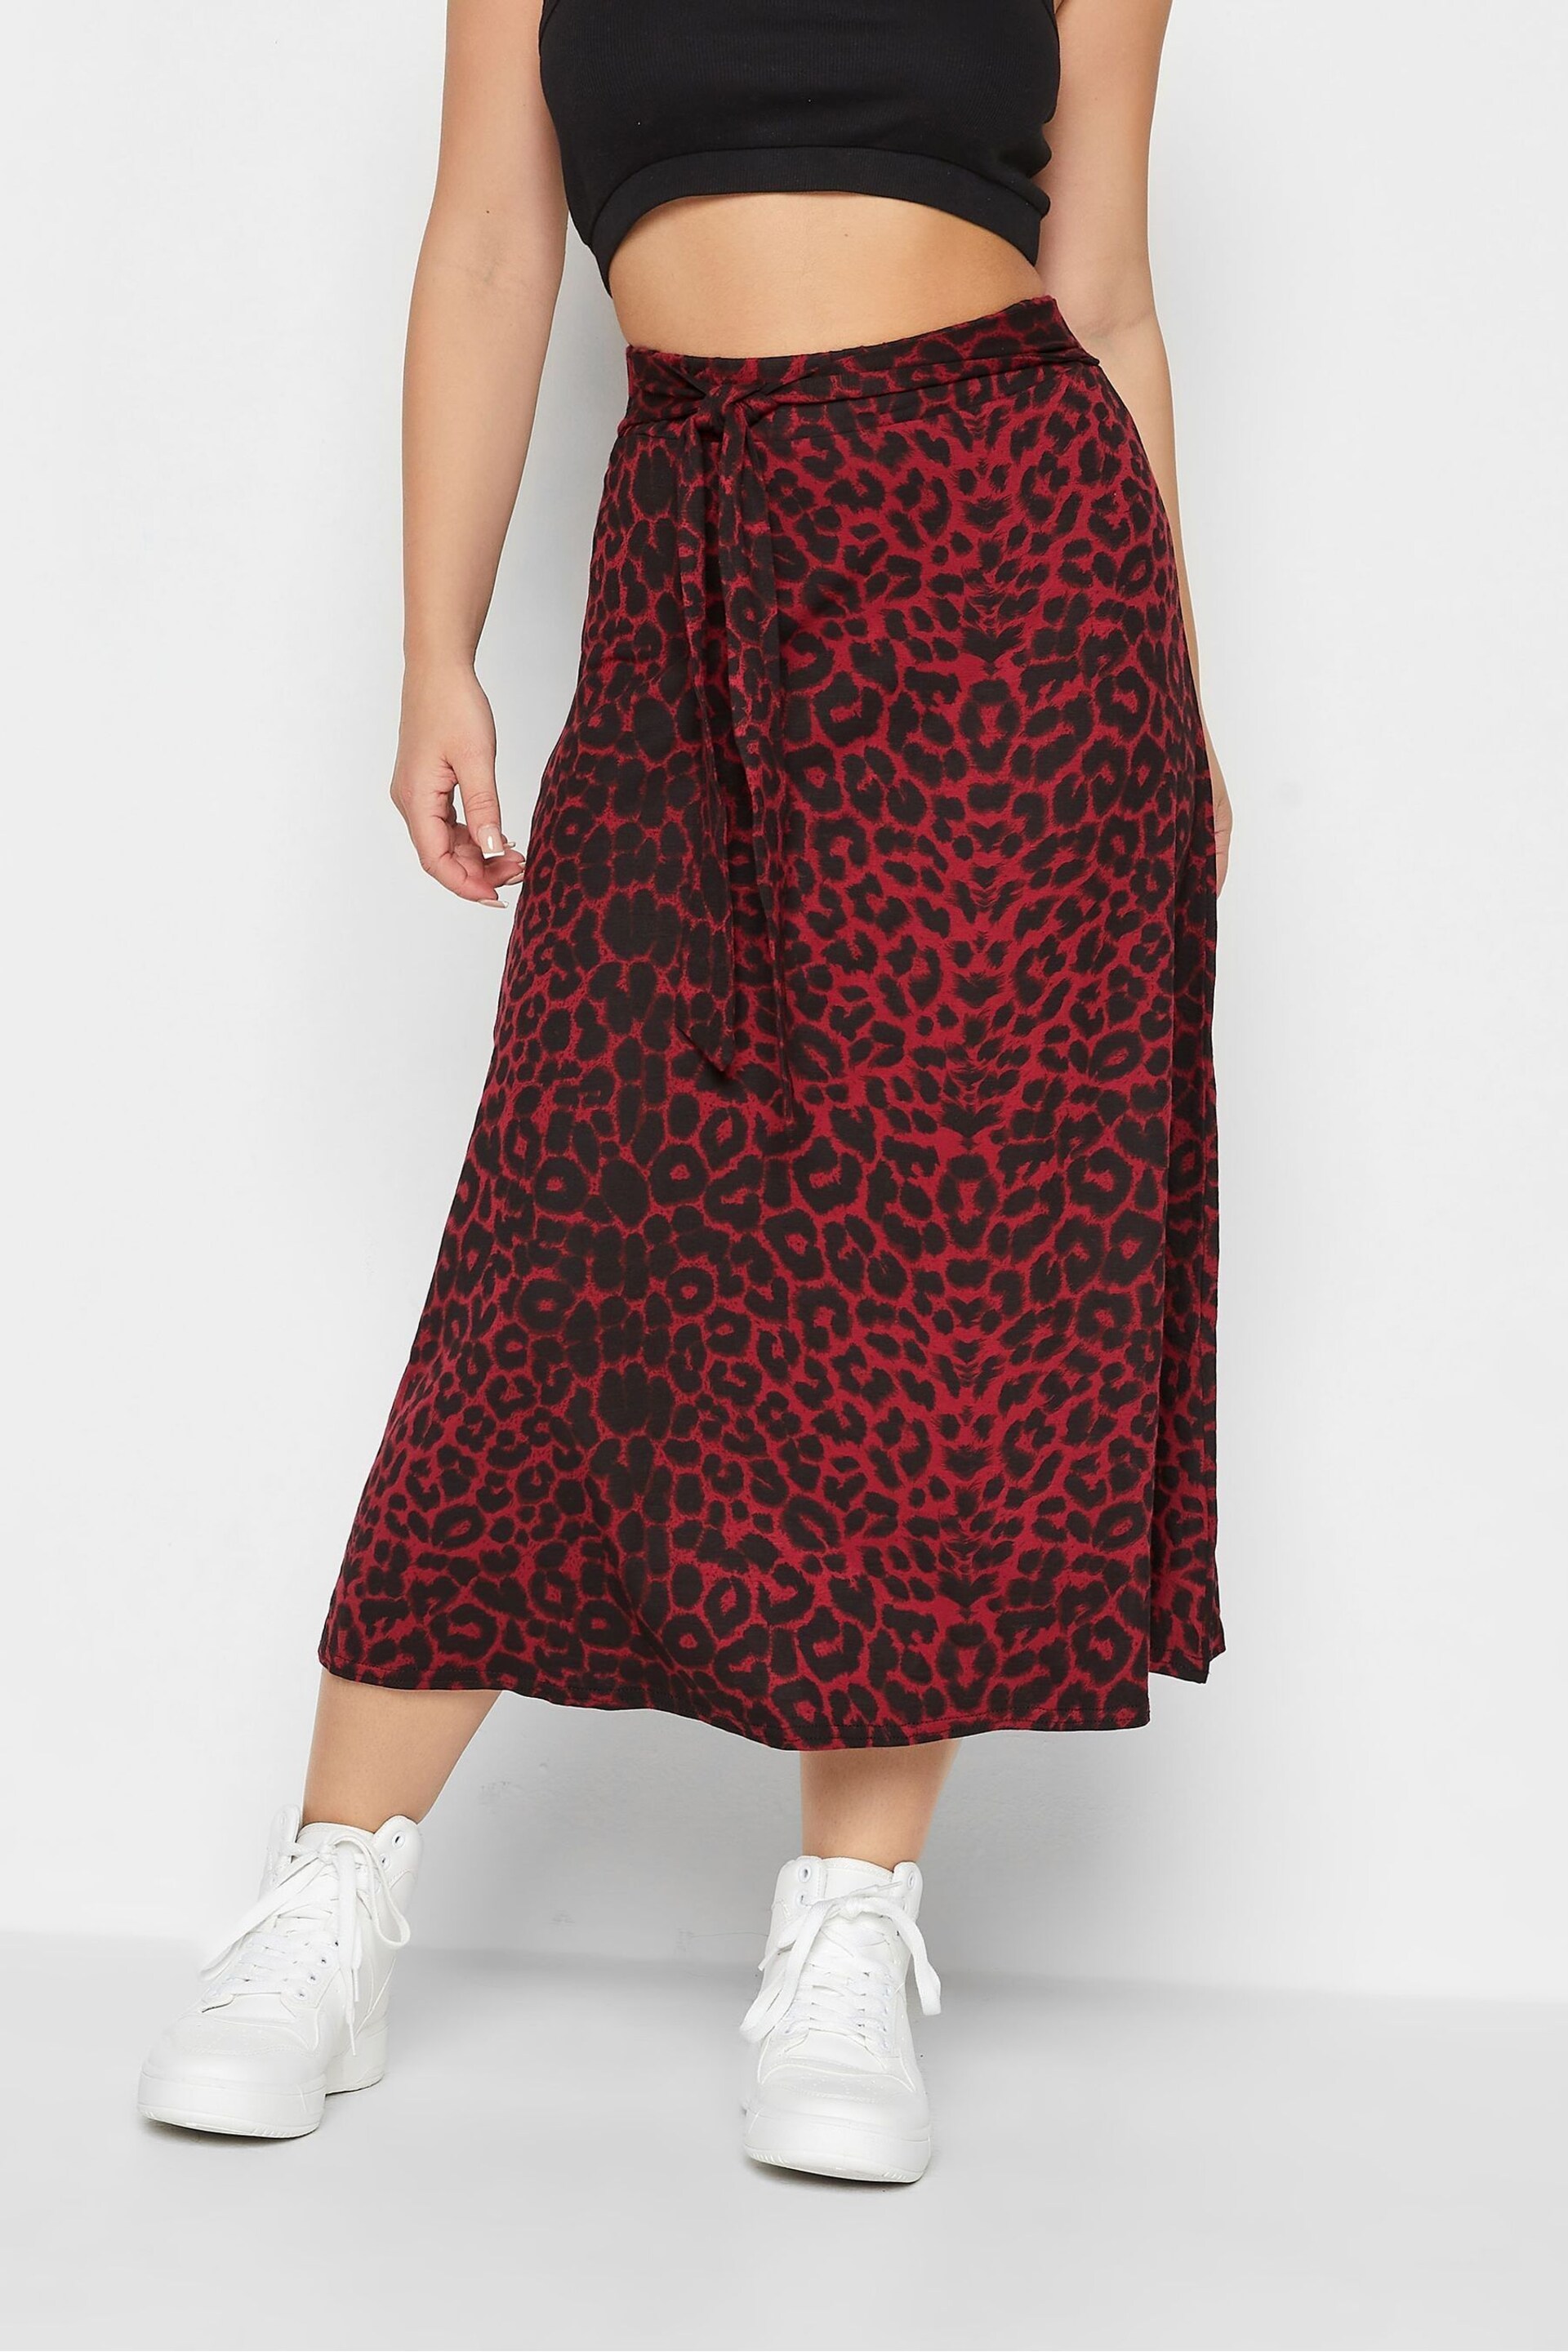 PixieGirl Petite Red Print Midi Skirt - Image 1 of 2